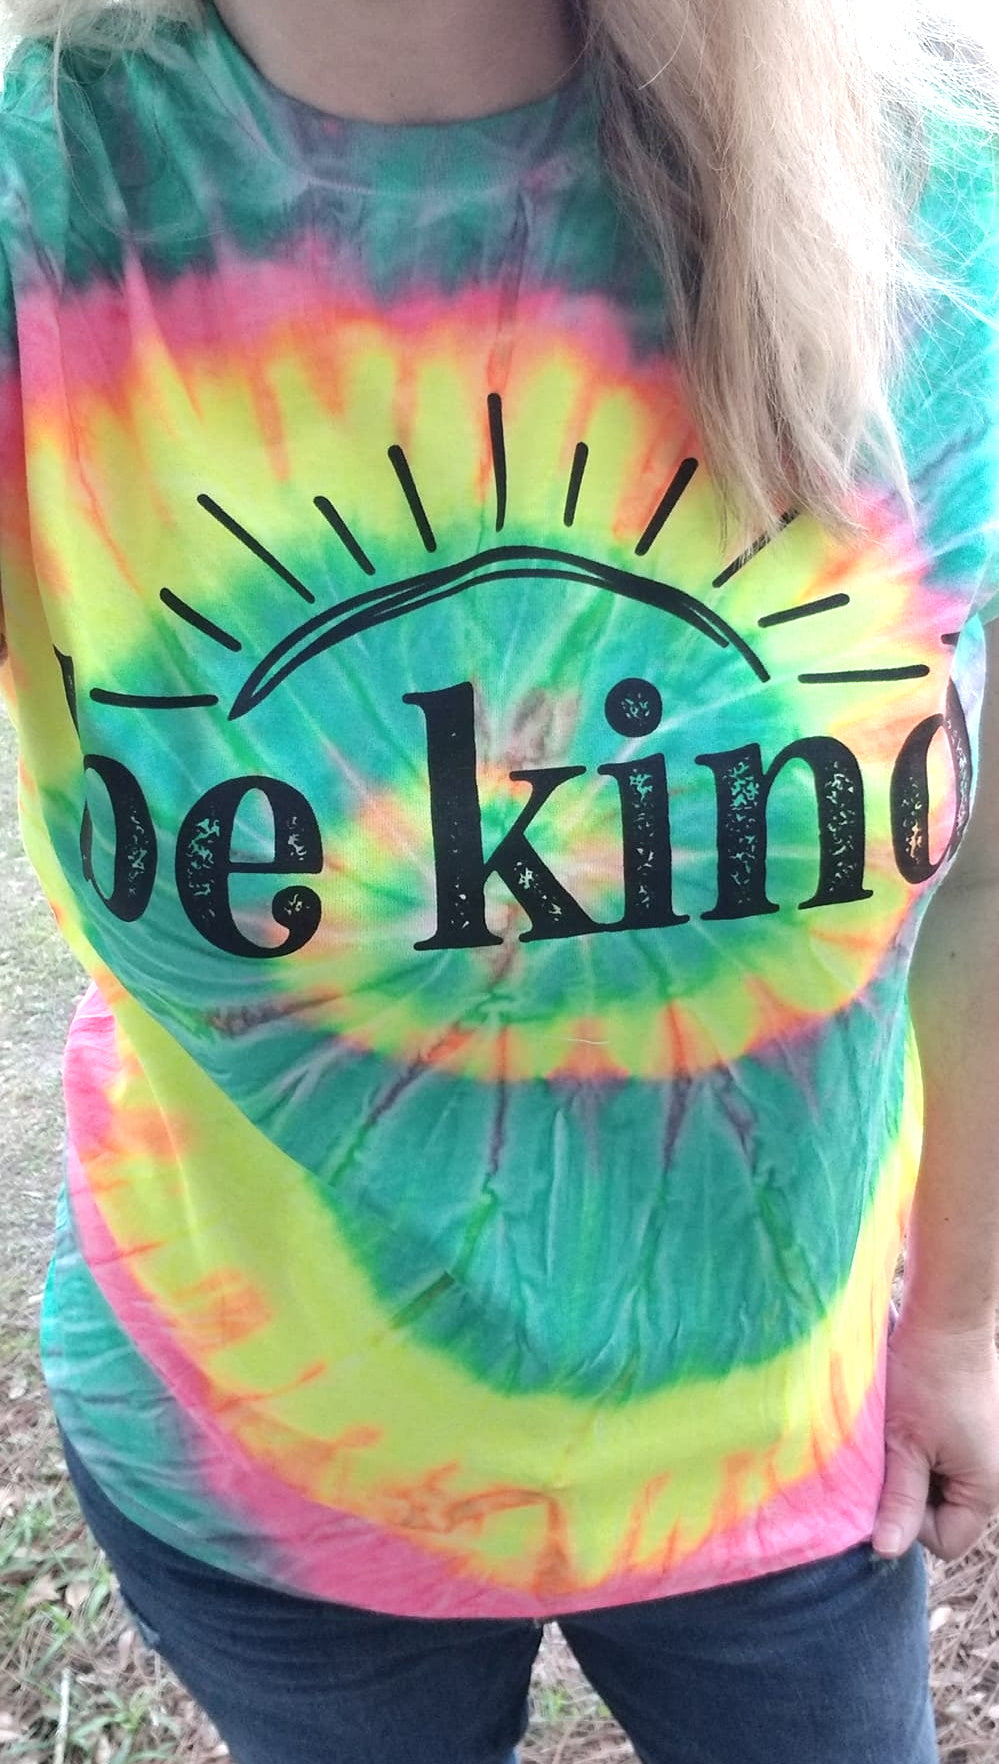 Be Kind Sunshine Minty Rainbow